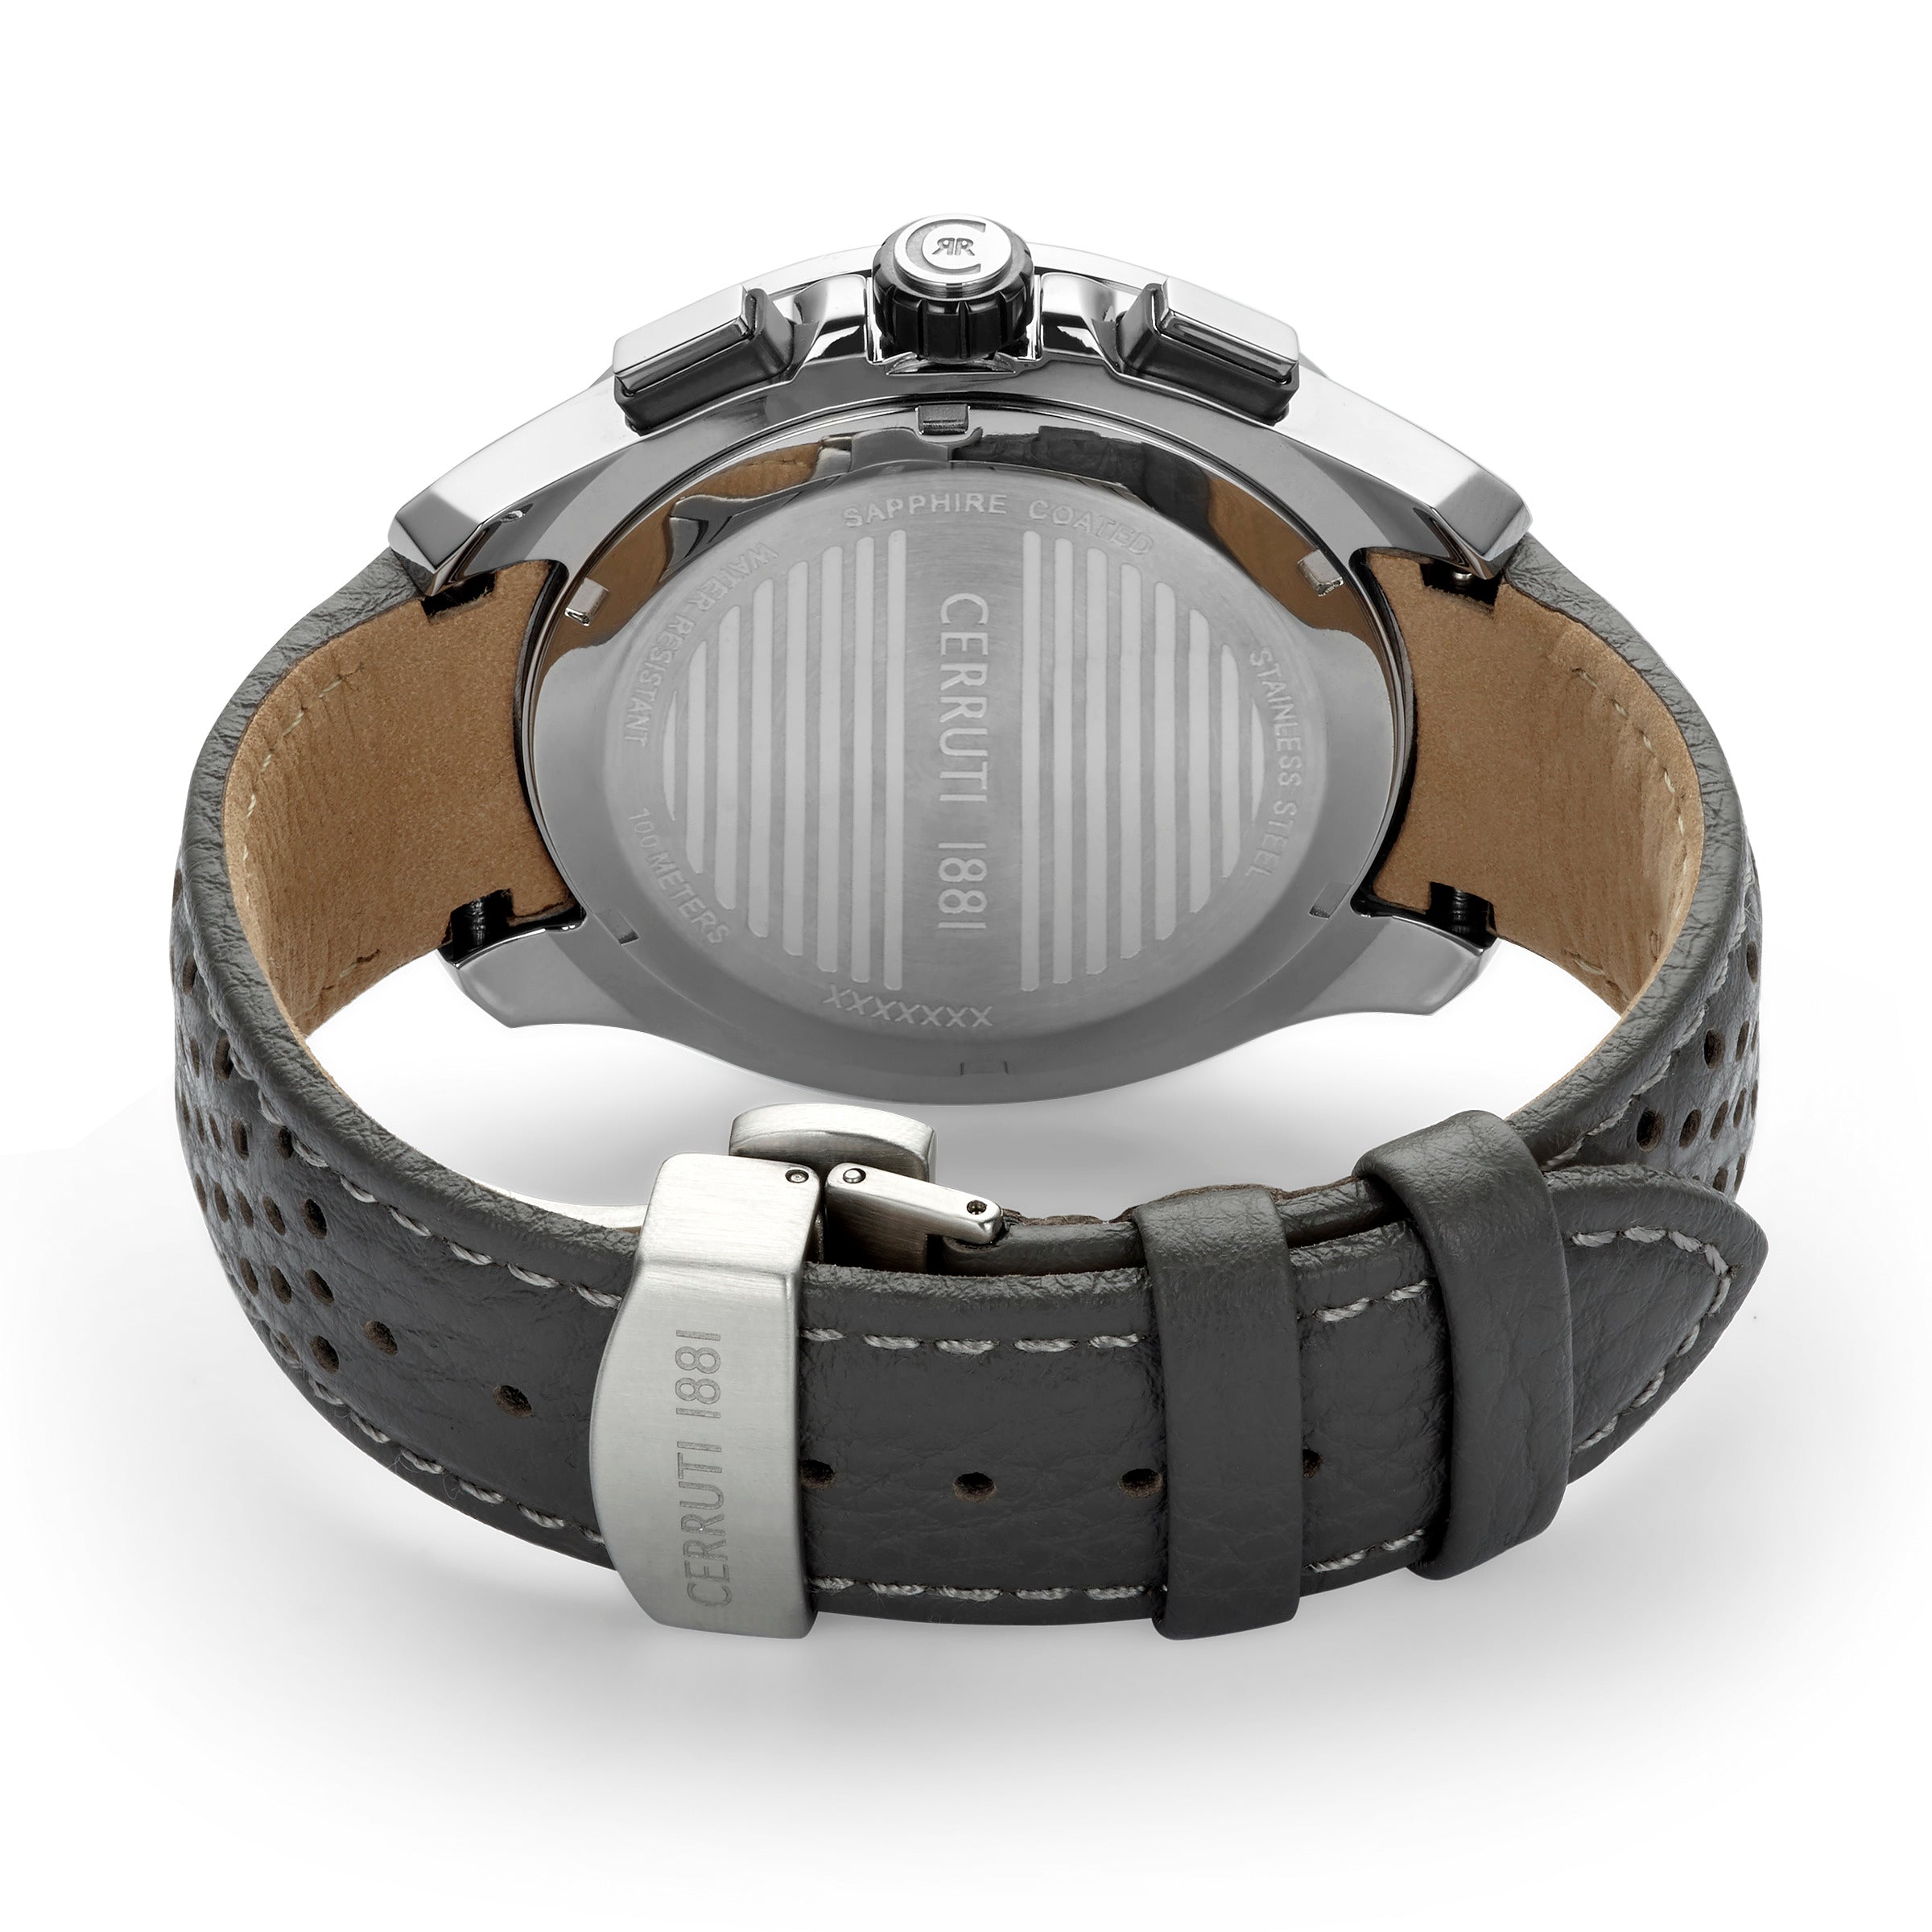 Cerruti Men's Quartz Watch, Silver Dial - CER-0451